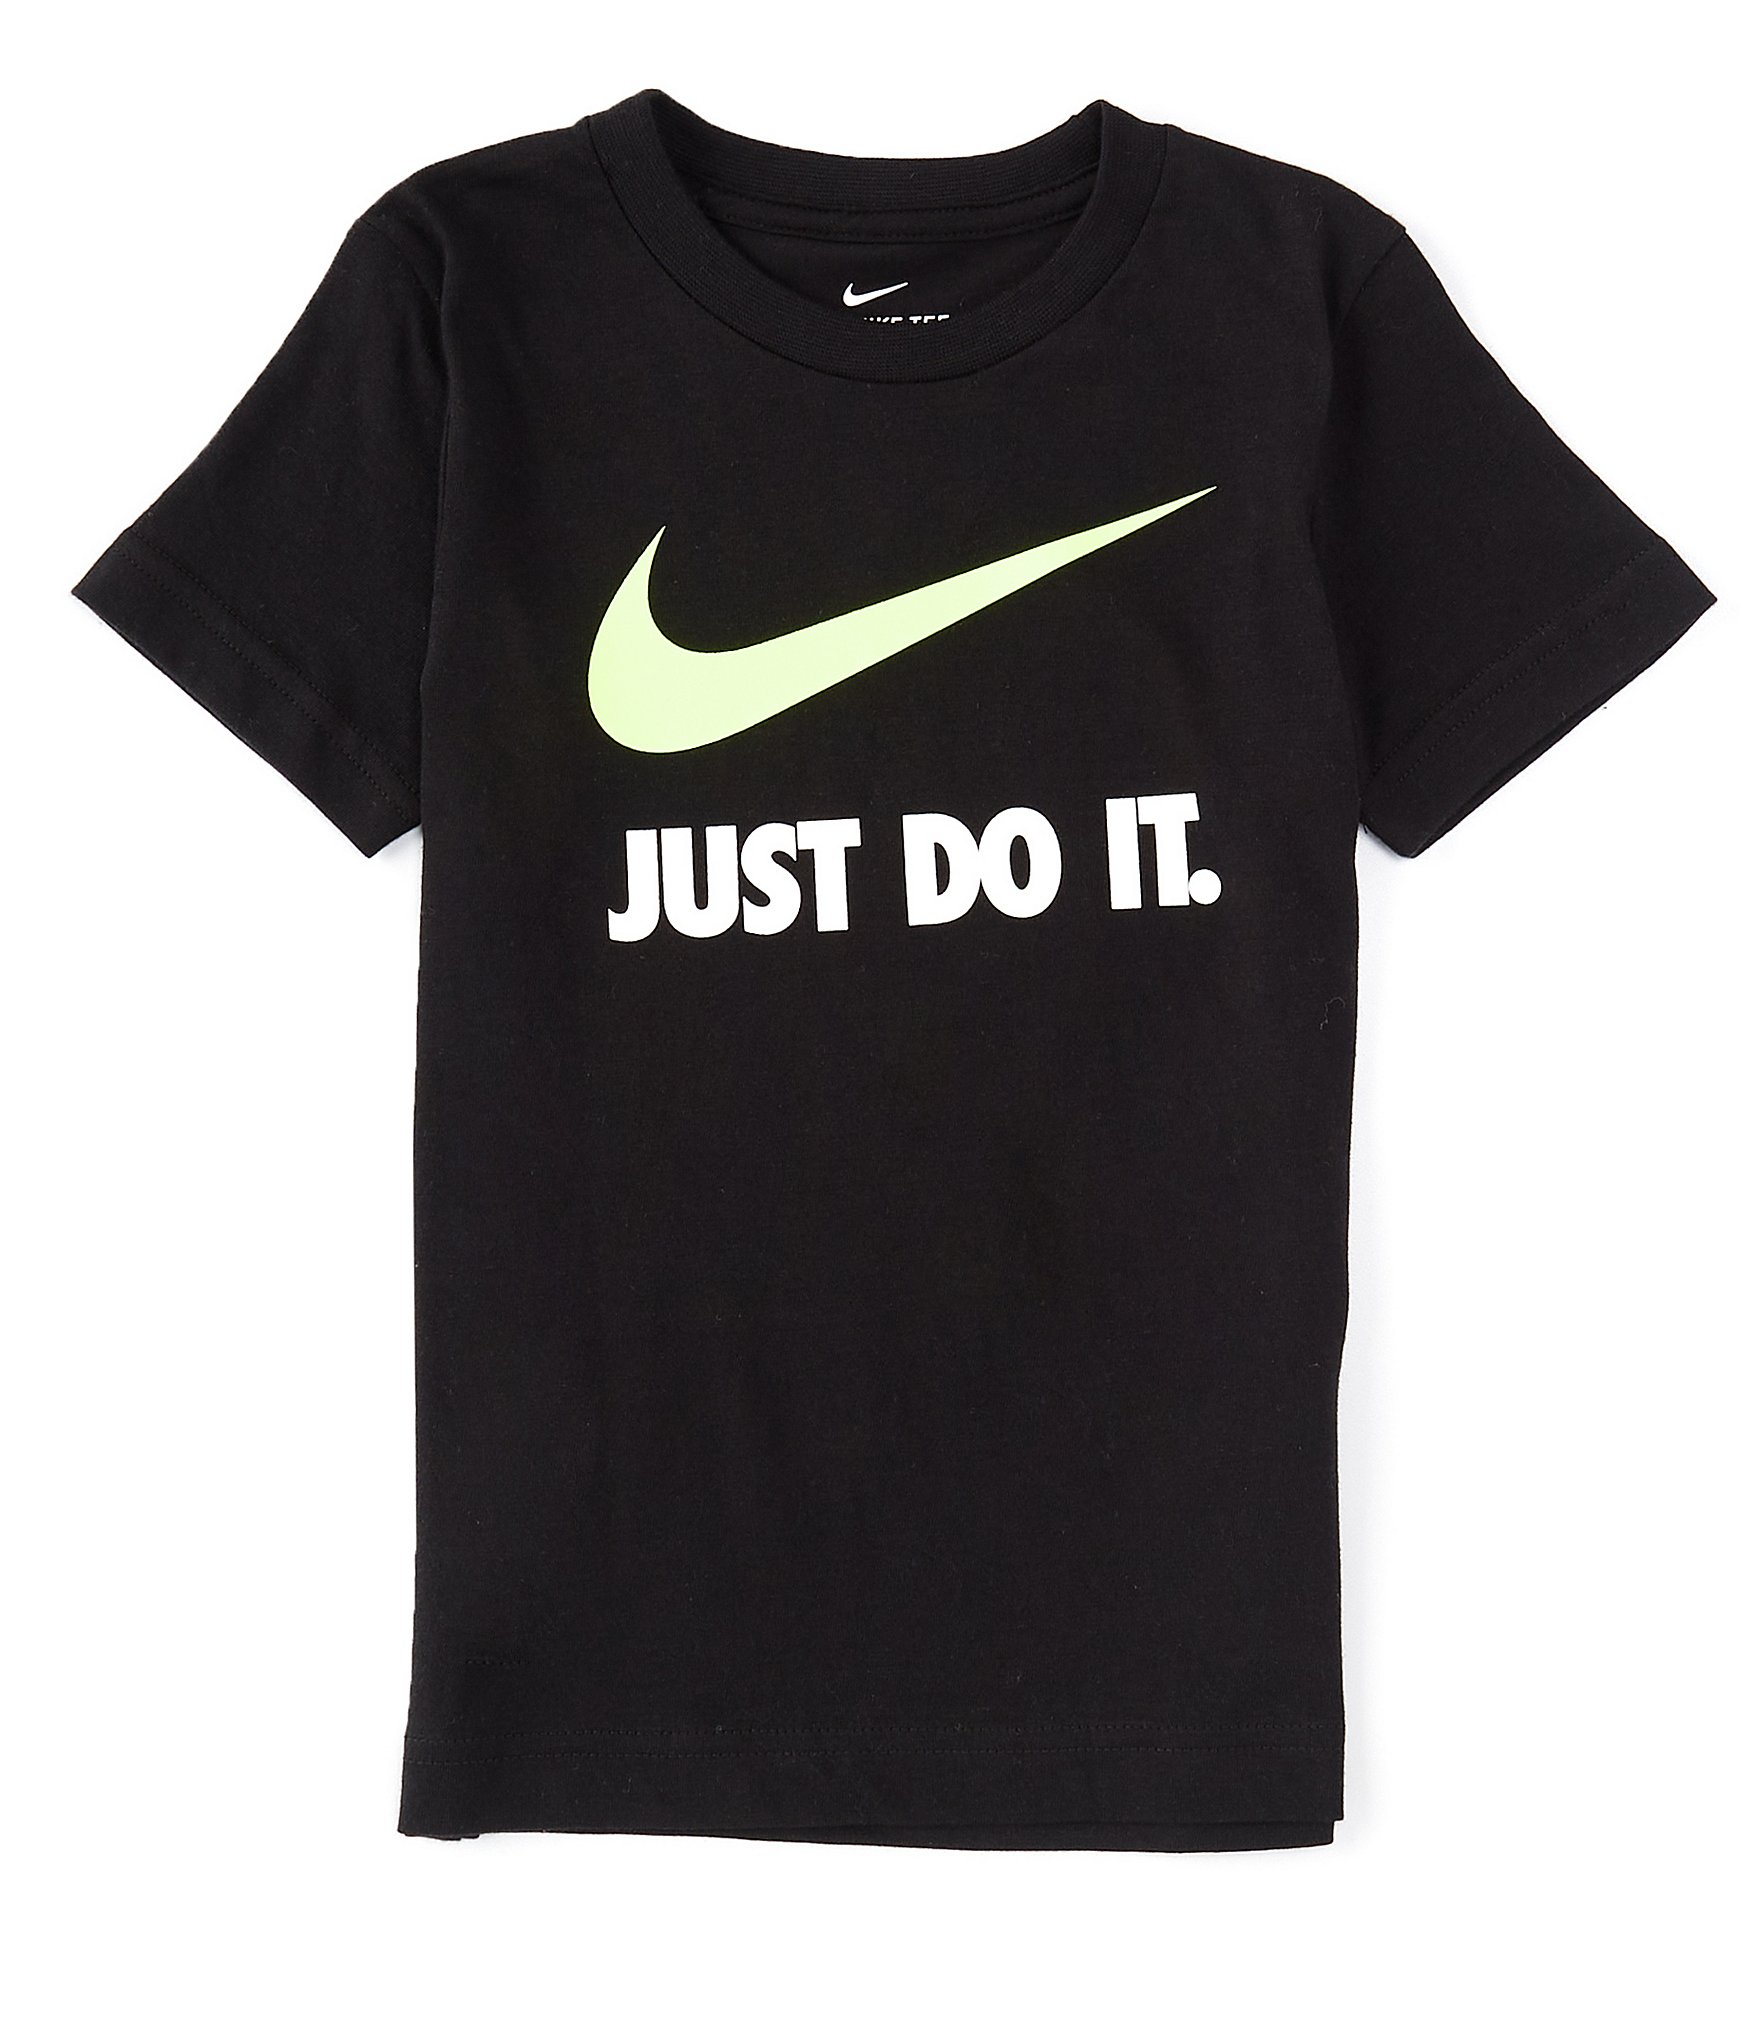 Nike. Just Do It. Nike IN